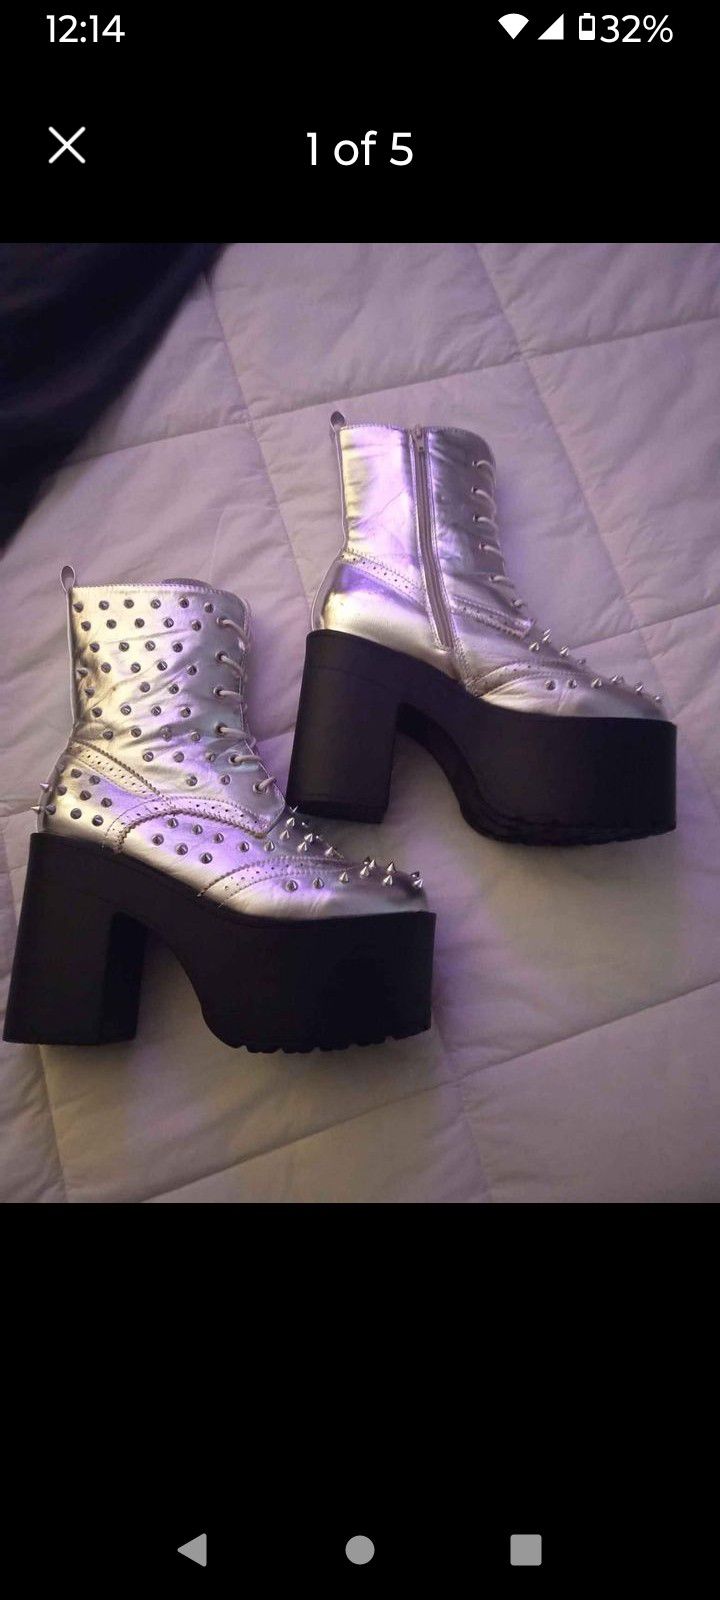 Women's Silver Spiked Platform Boots